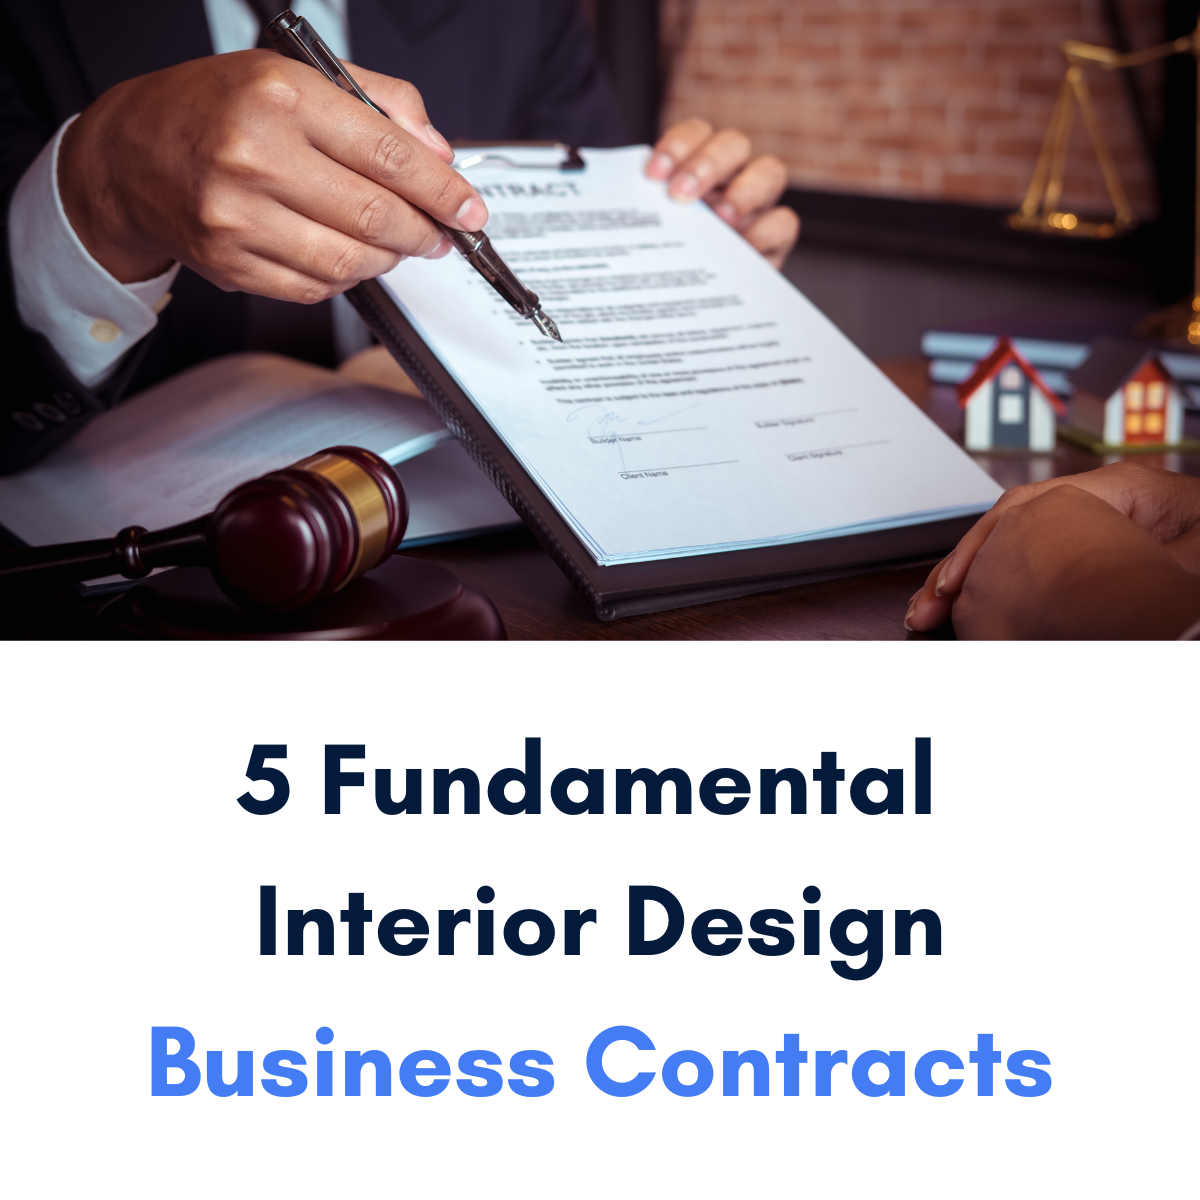 5 Fundamental Interior Design Business Contracts